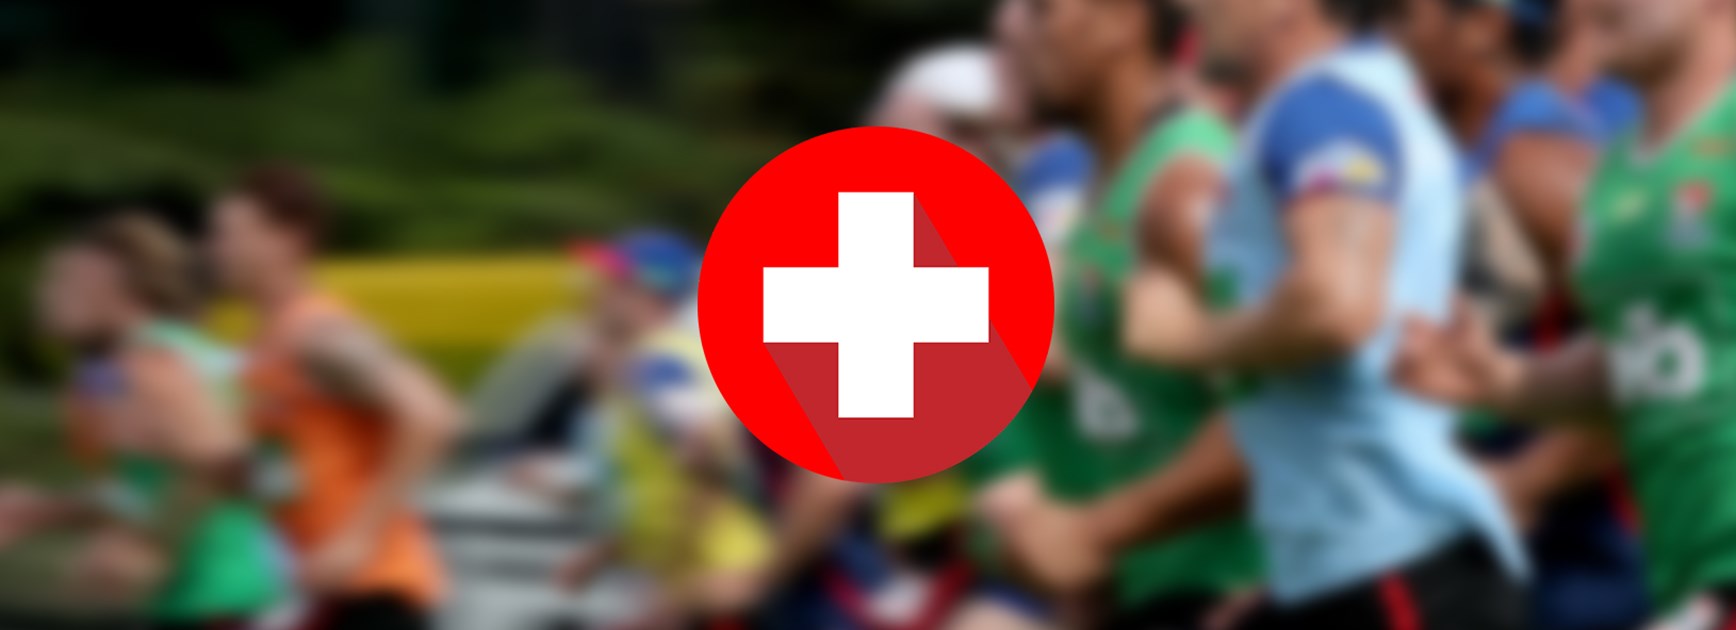 Injury update: Slade leg infection, Tautau boost